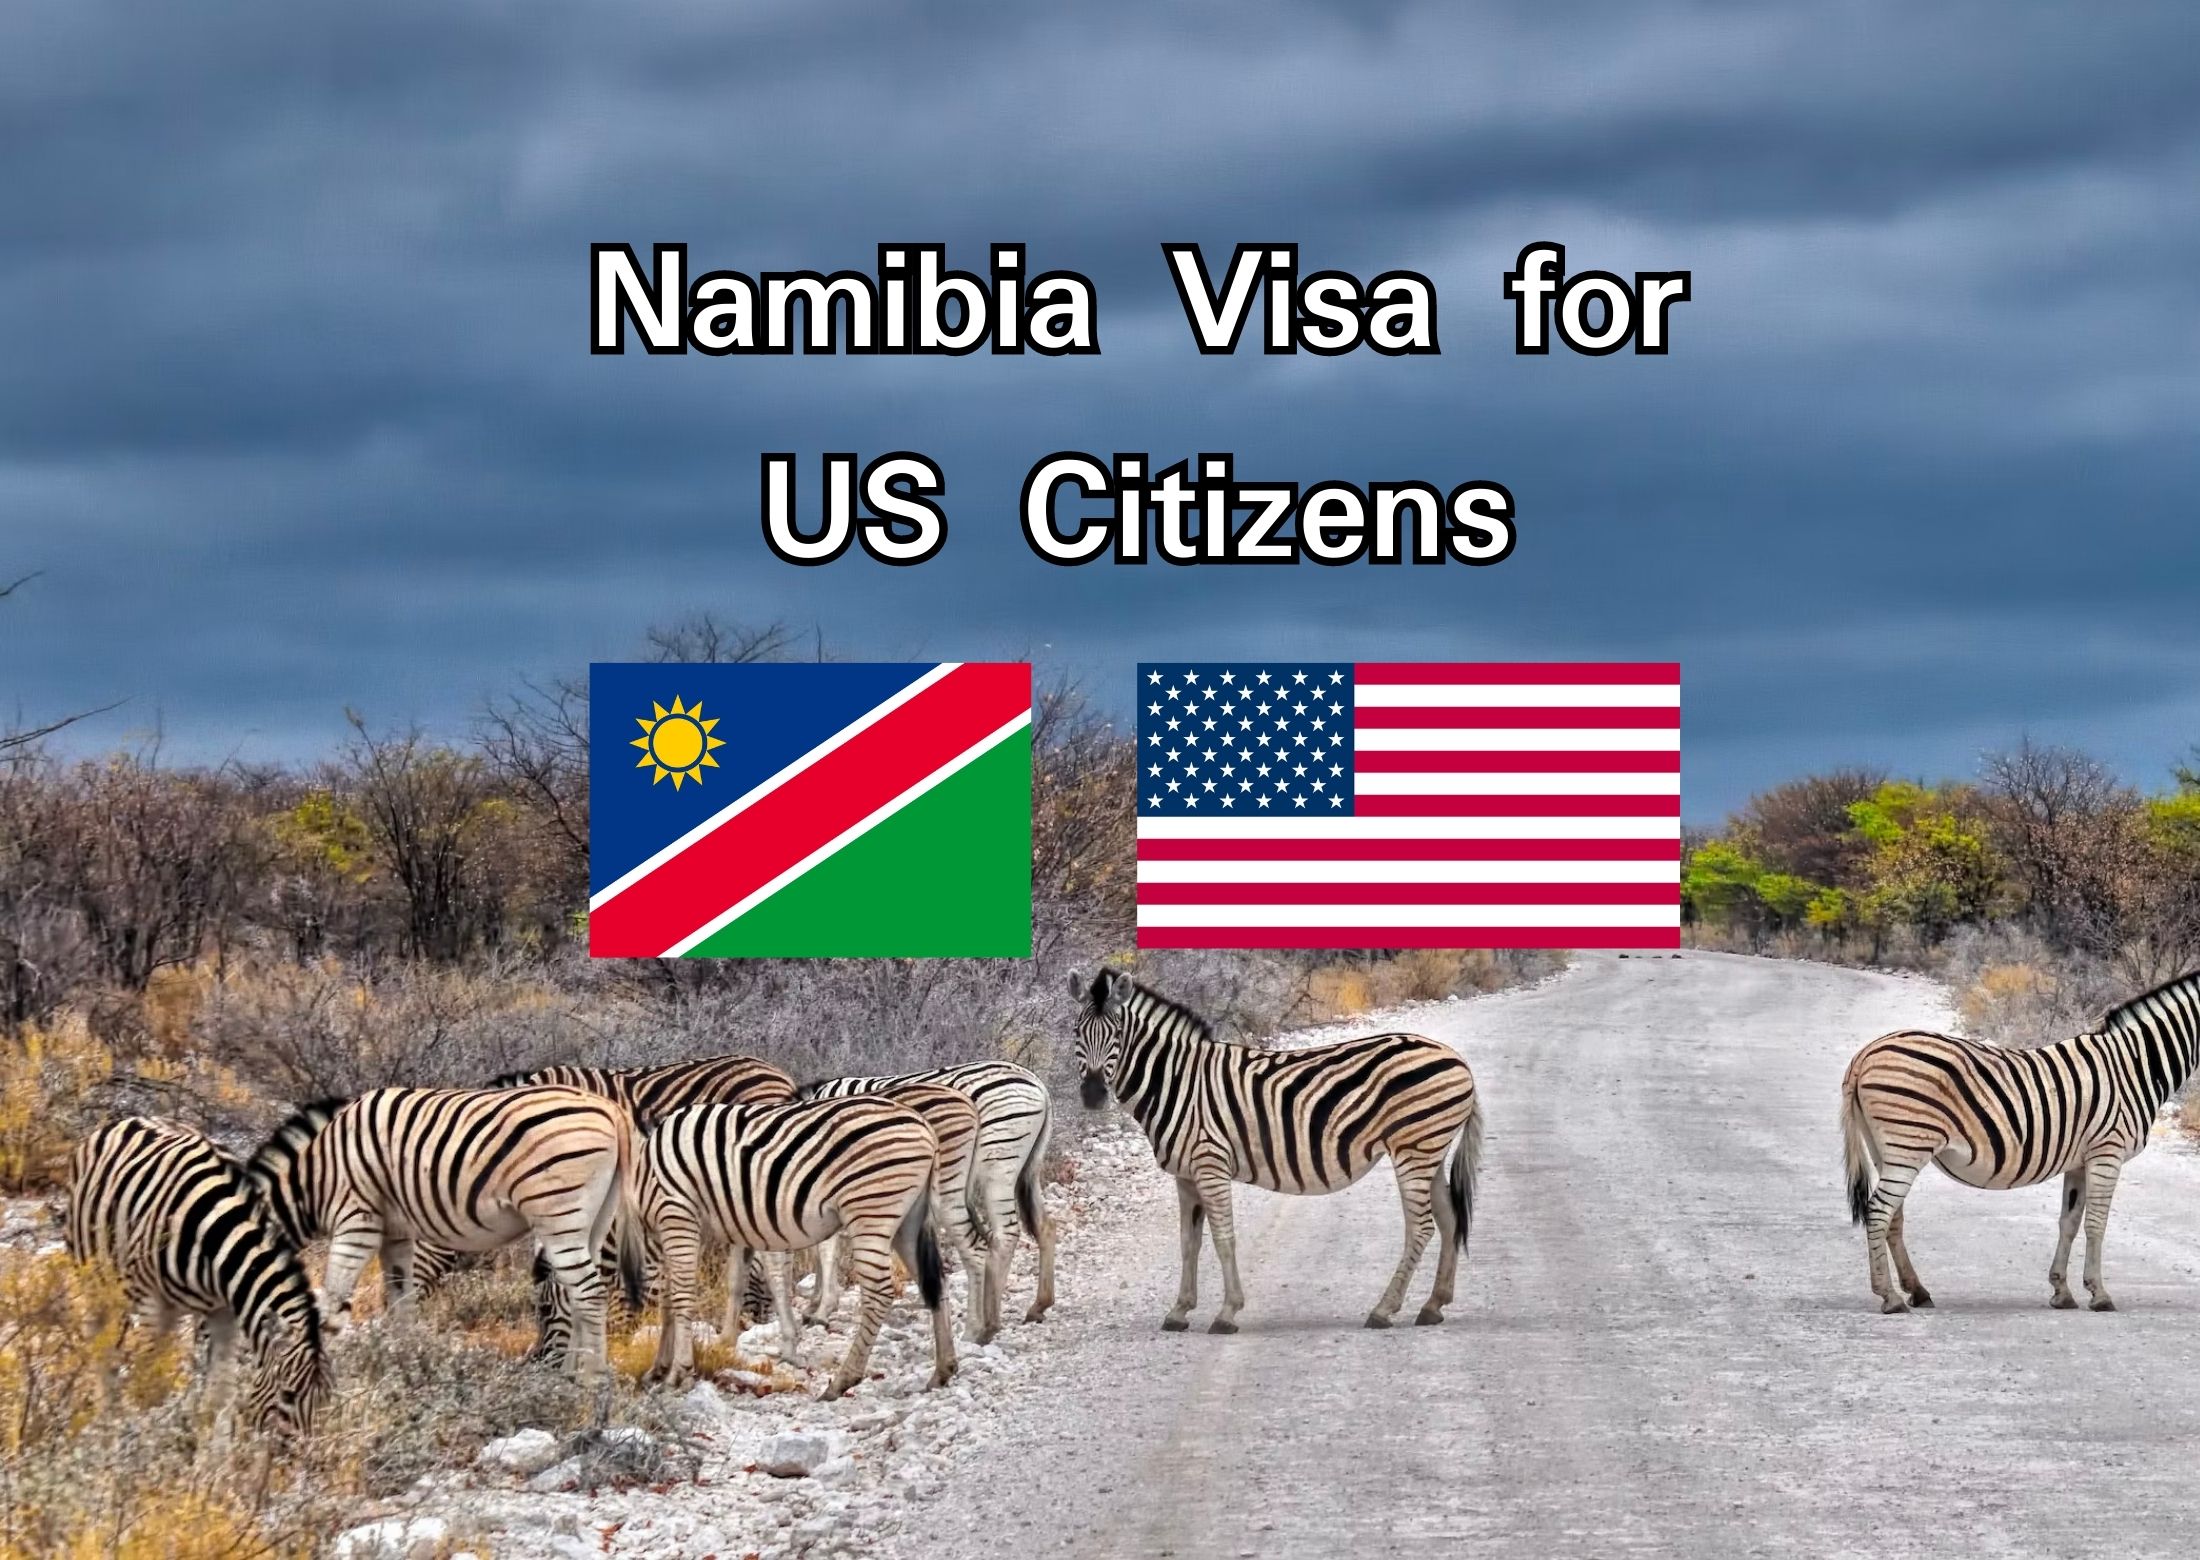 Namibia Visa for US Citizens